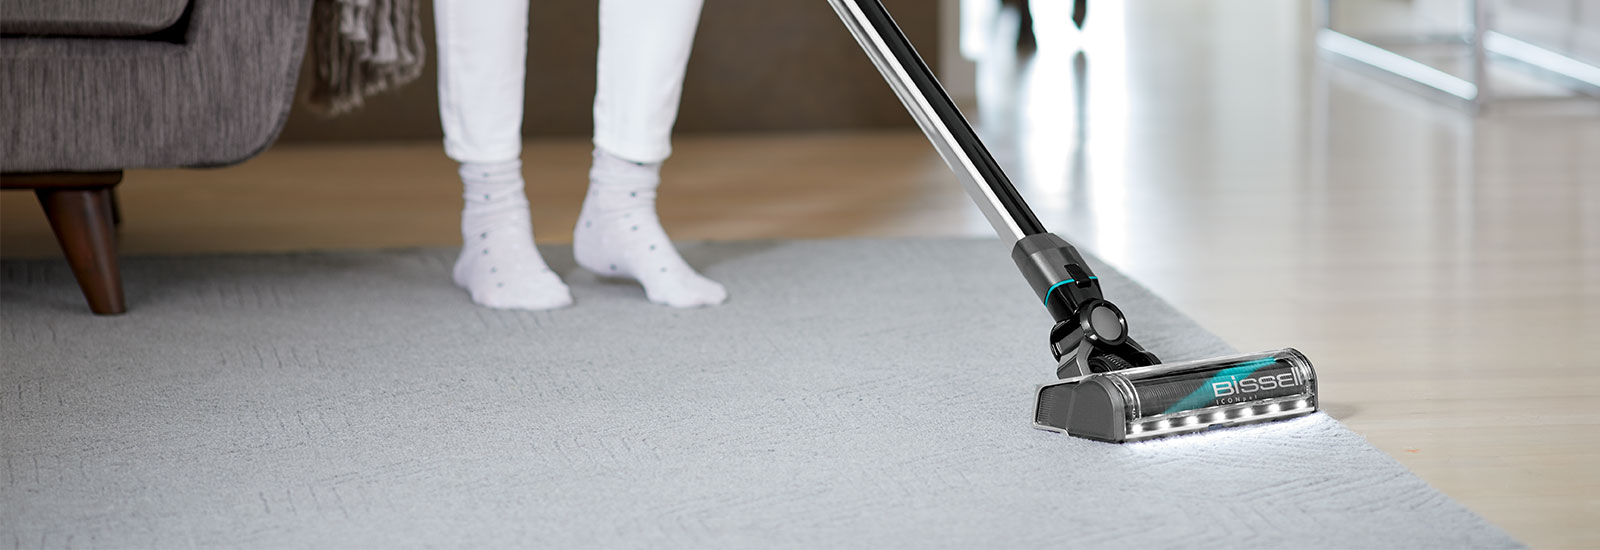 Carpet Care - Vacuuming Carpet